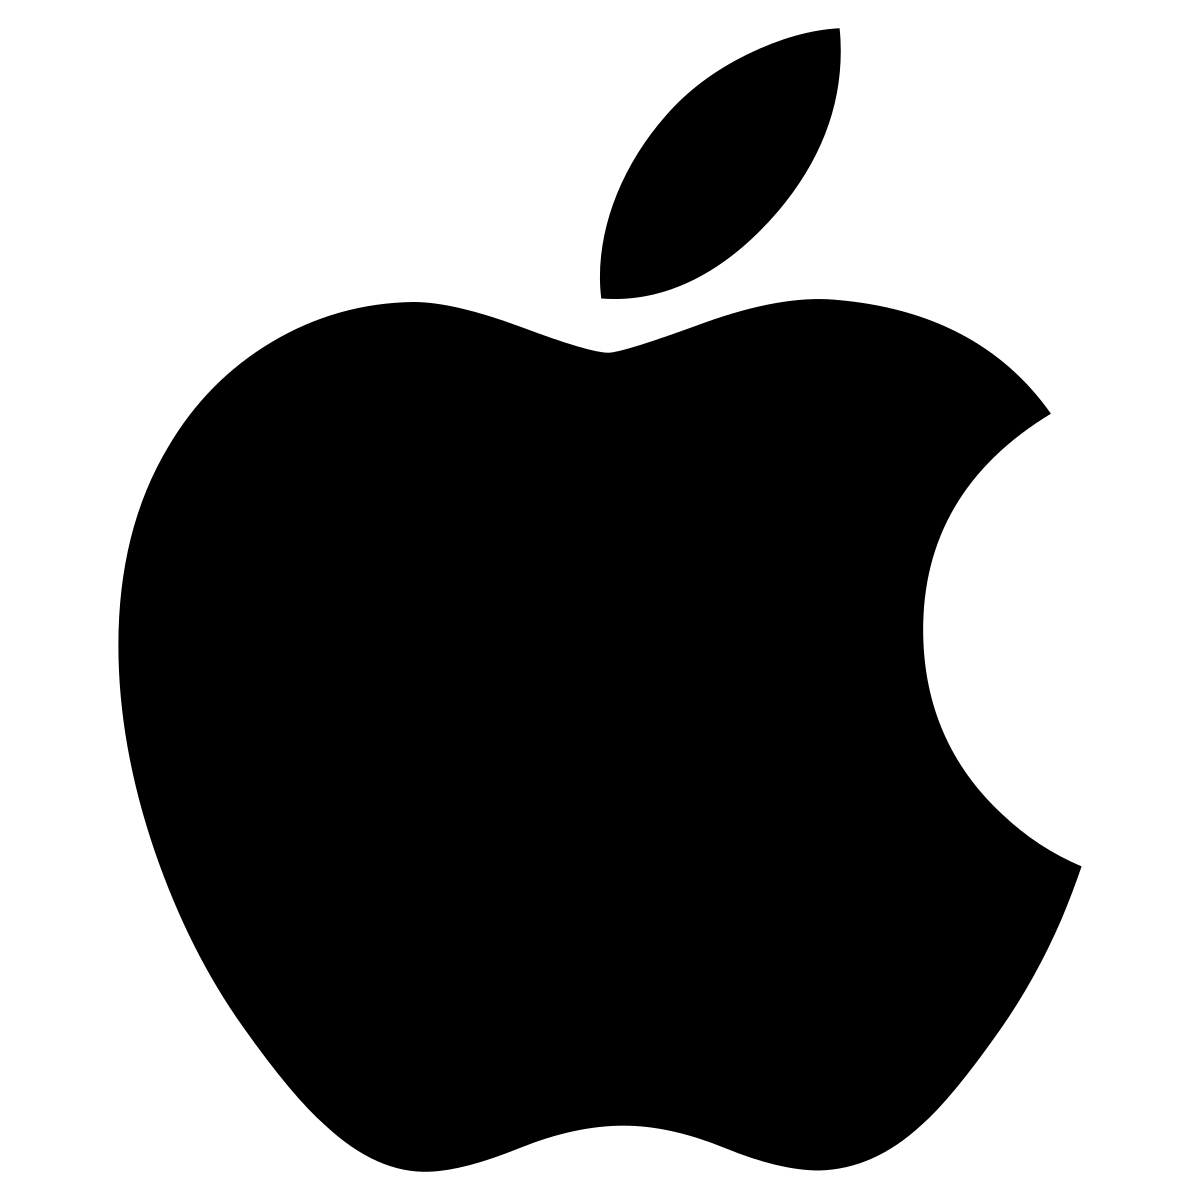 Black and White Apple Logo - History of Apple Inc